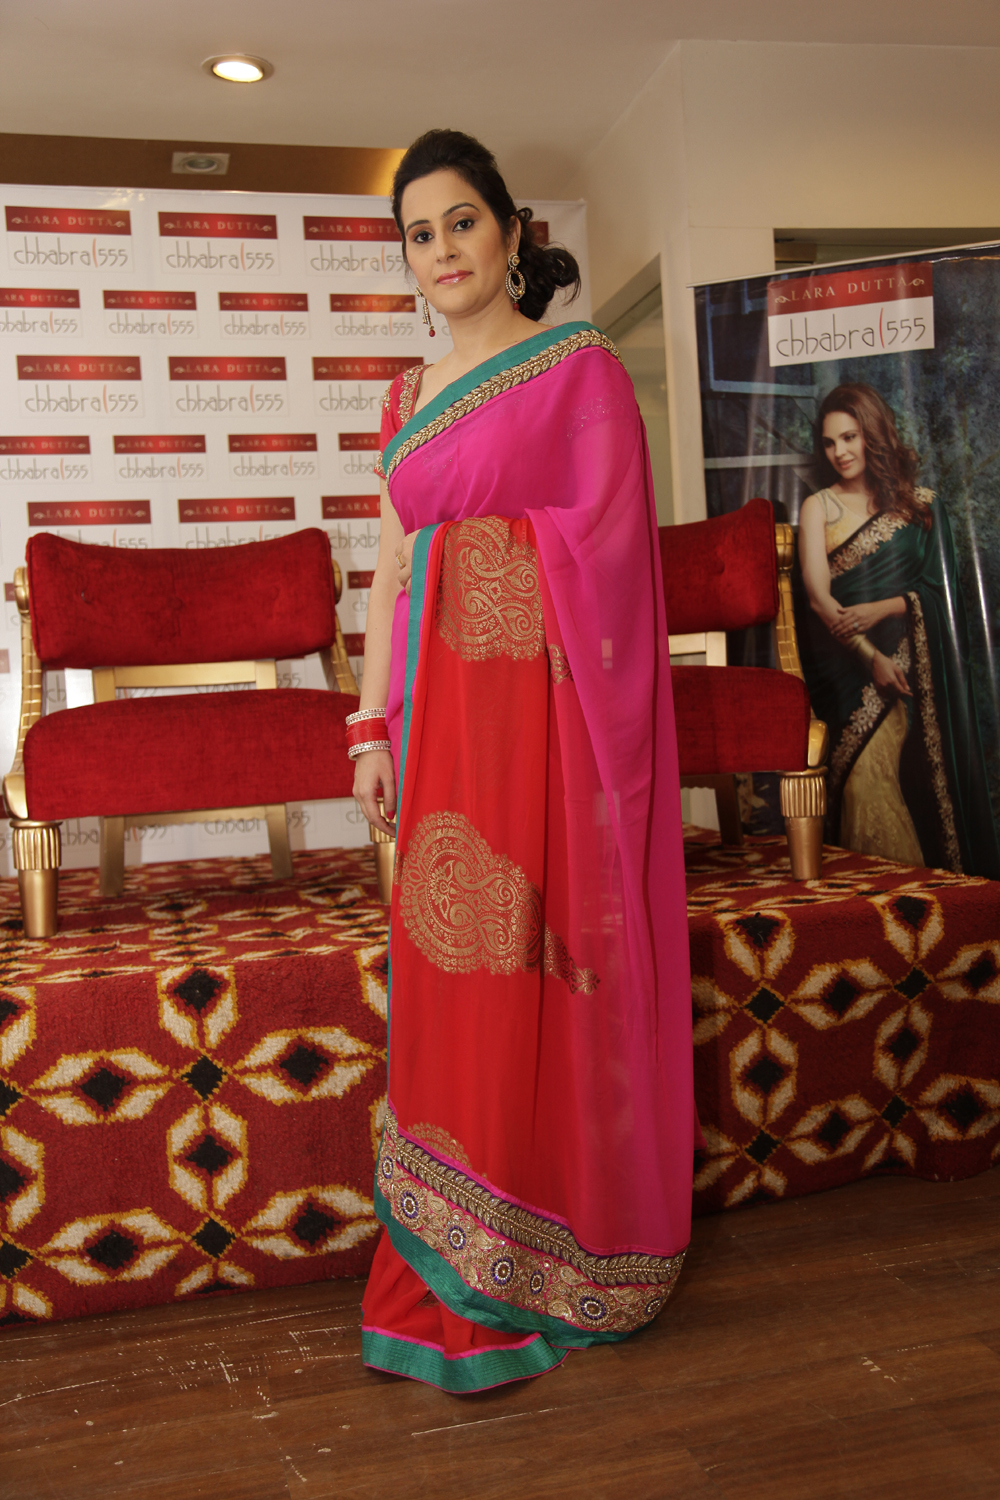 Priyanka Pasrija - Muse of Lara Dutta - Chhabra 555 Collection